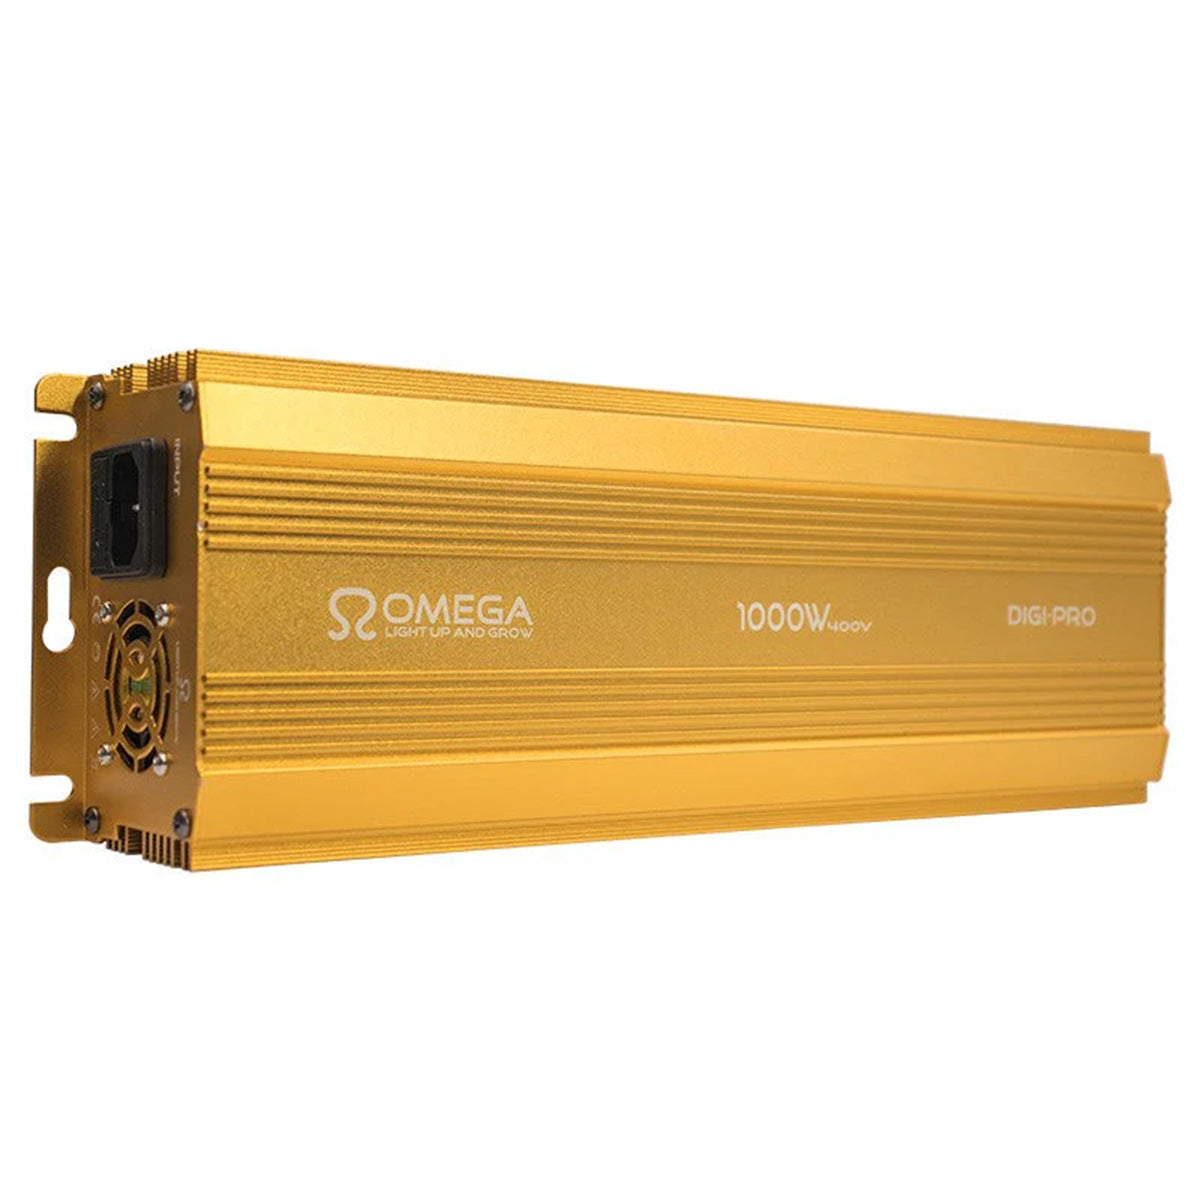 Omega 1000w 400v Digital Pro Dimmable Ballast